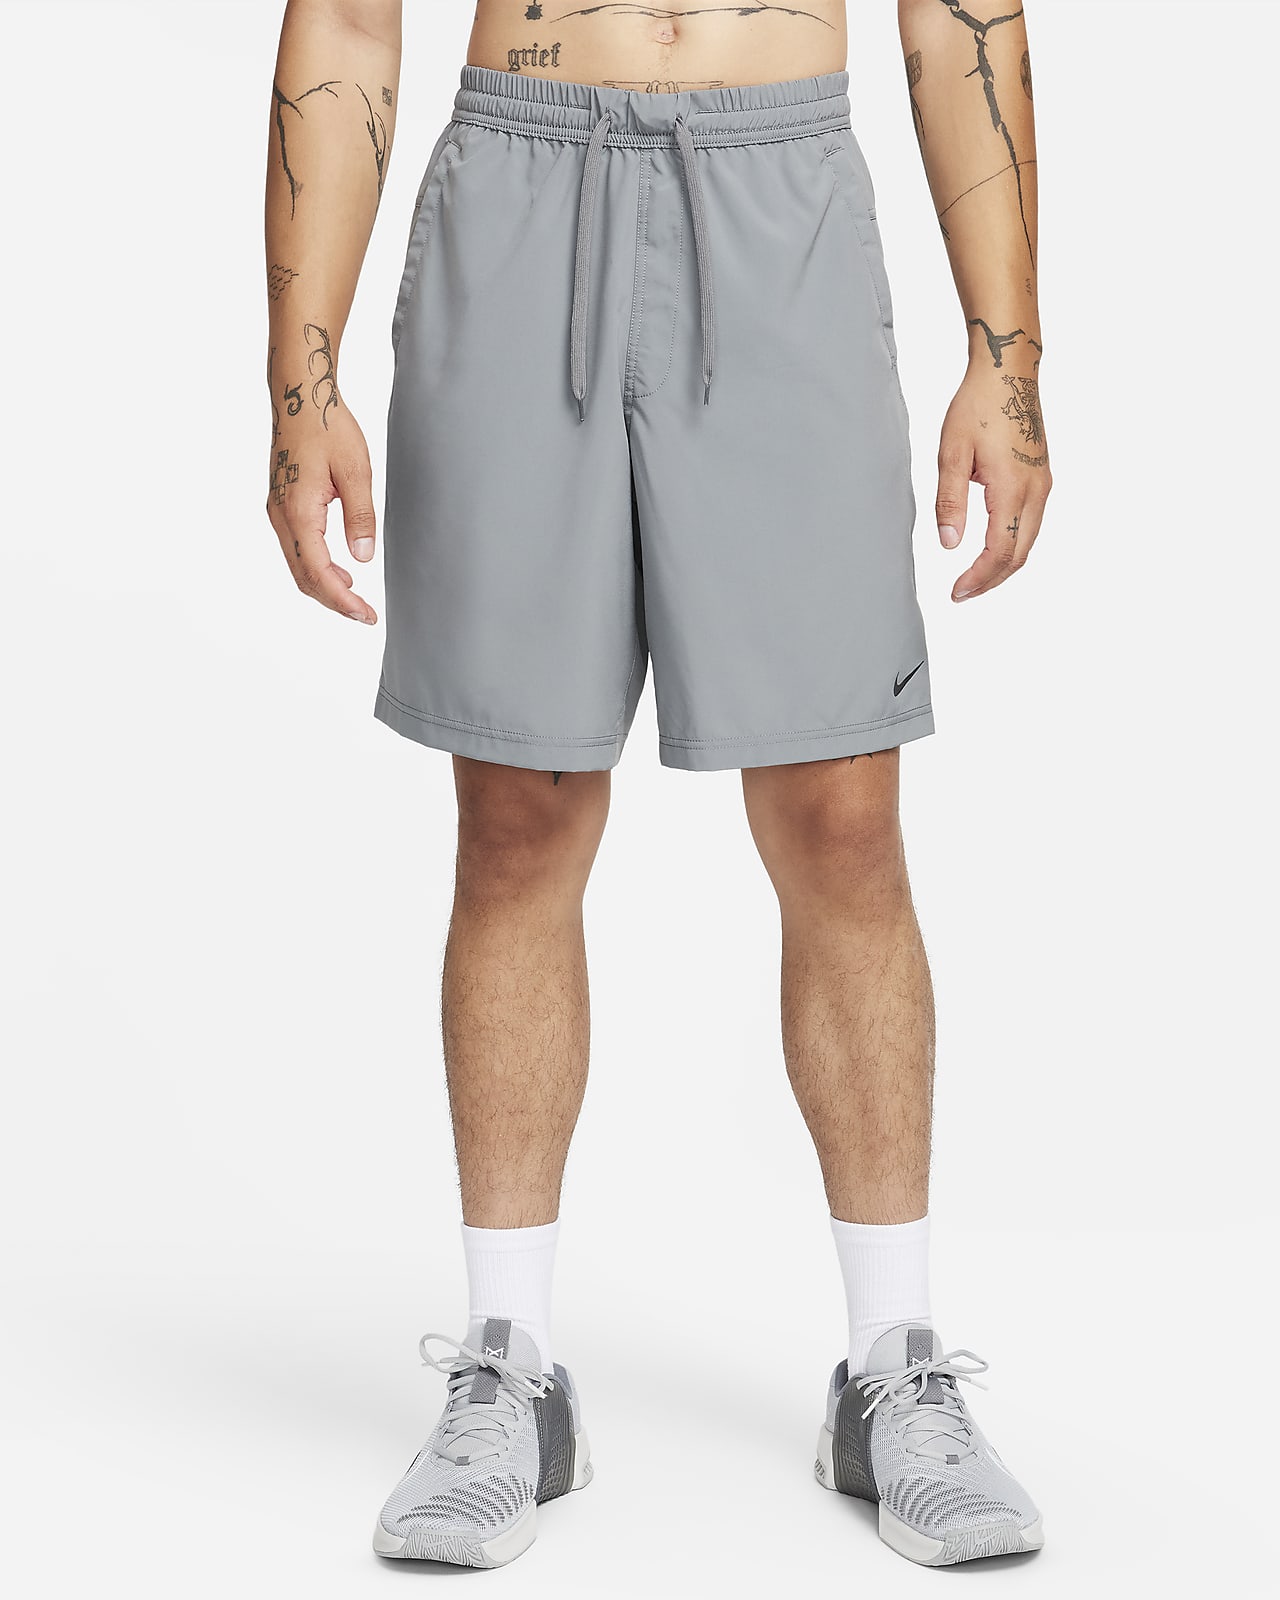 Shorts versátiles Dri-FIT de 23 cm sin forro para hombre Nike Form